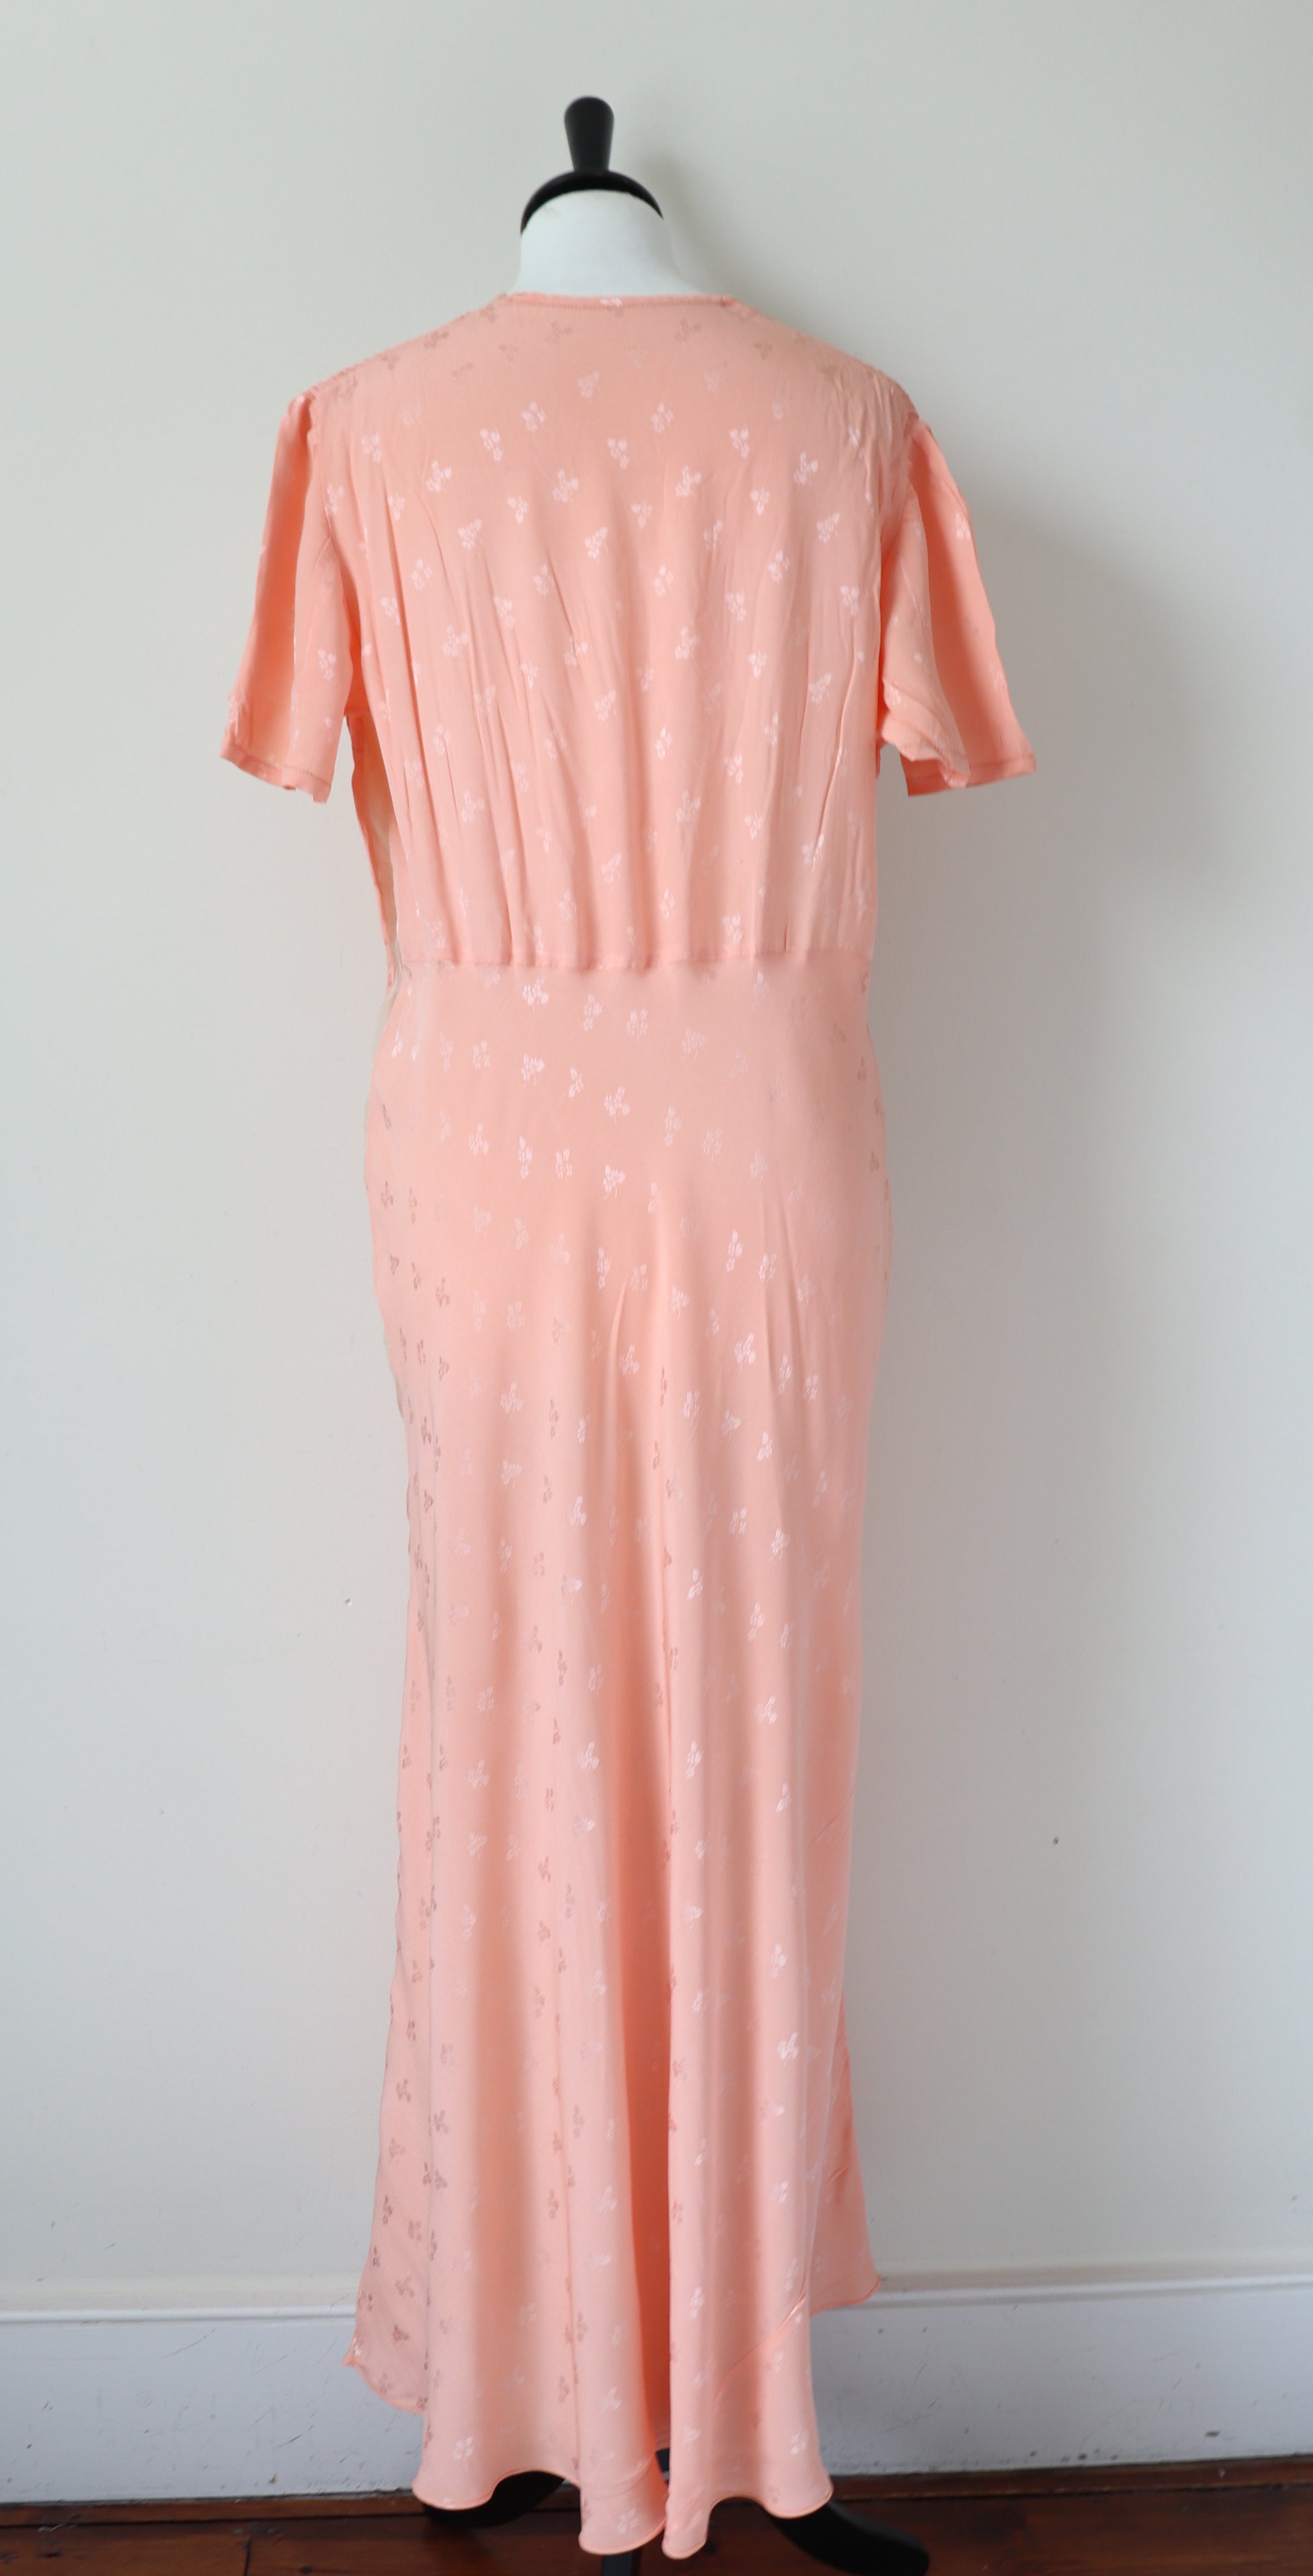 Vintage 1940s / 1950s Maxi Nightdress / Evening Dress - Salmon Pink - M / UK 12